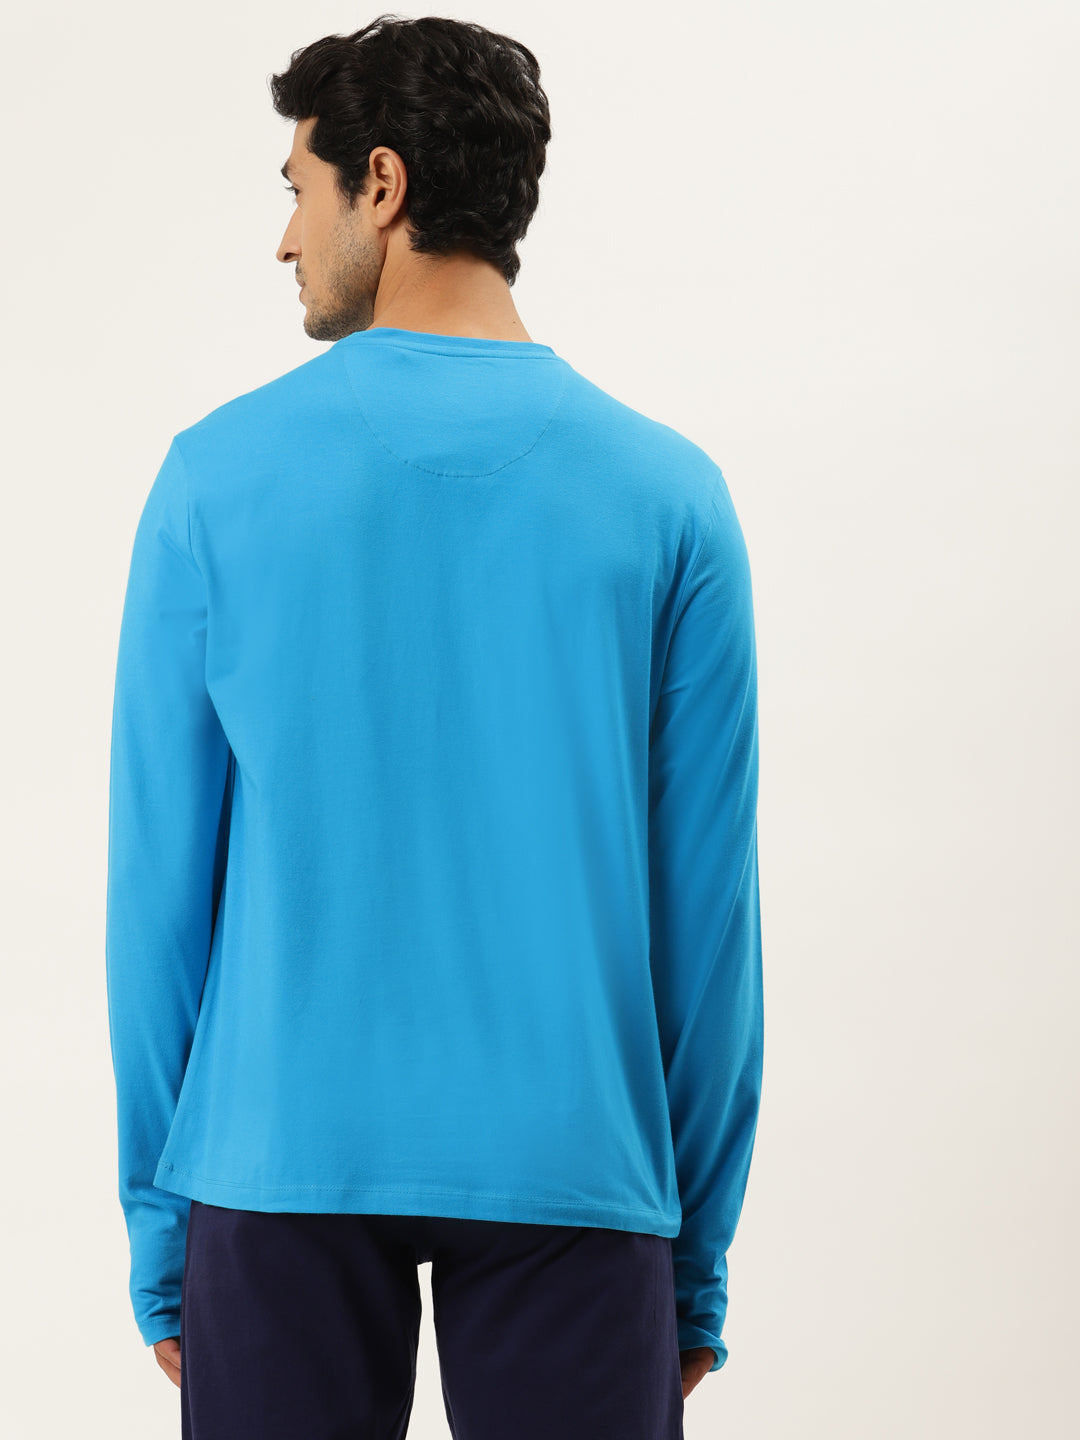 Men's Premium Cotton Lycra Smart Fit Crew Neck Full Sleeves Tshirts